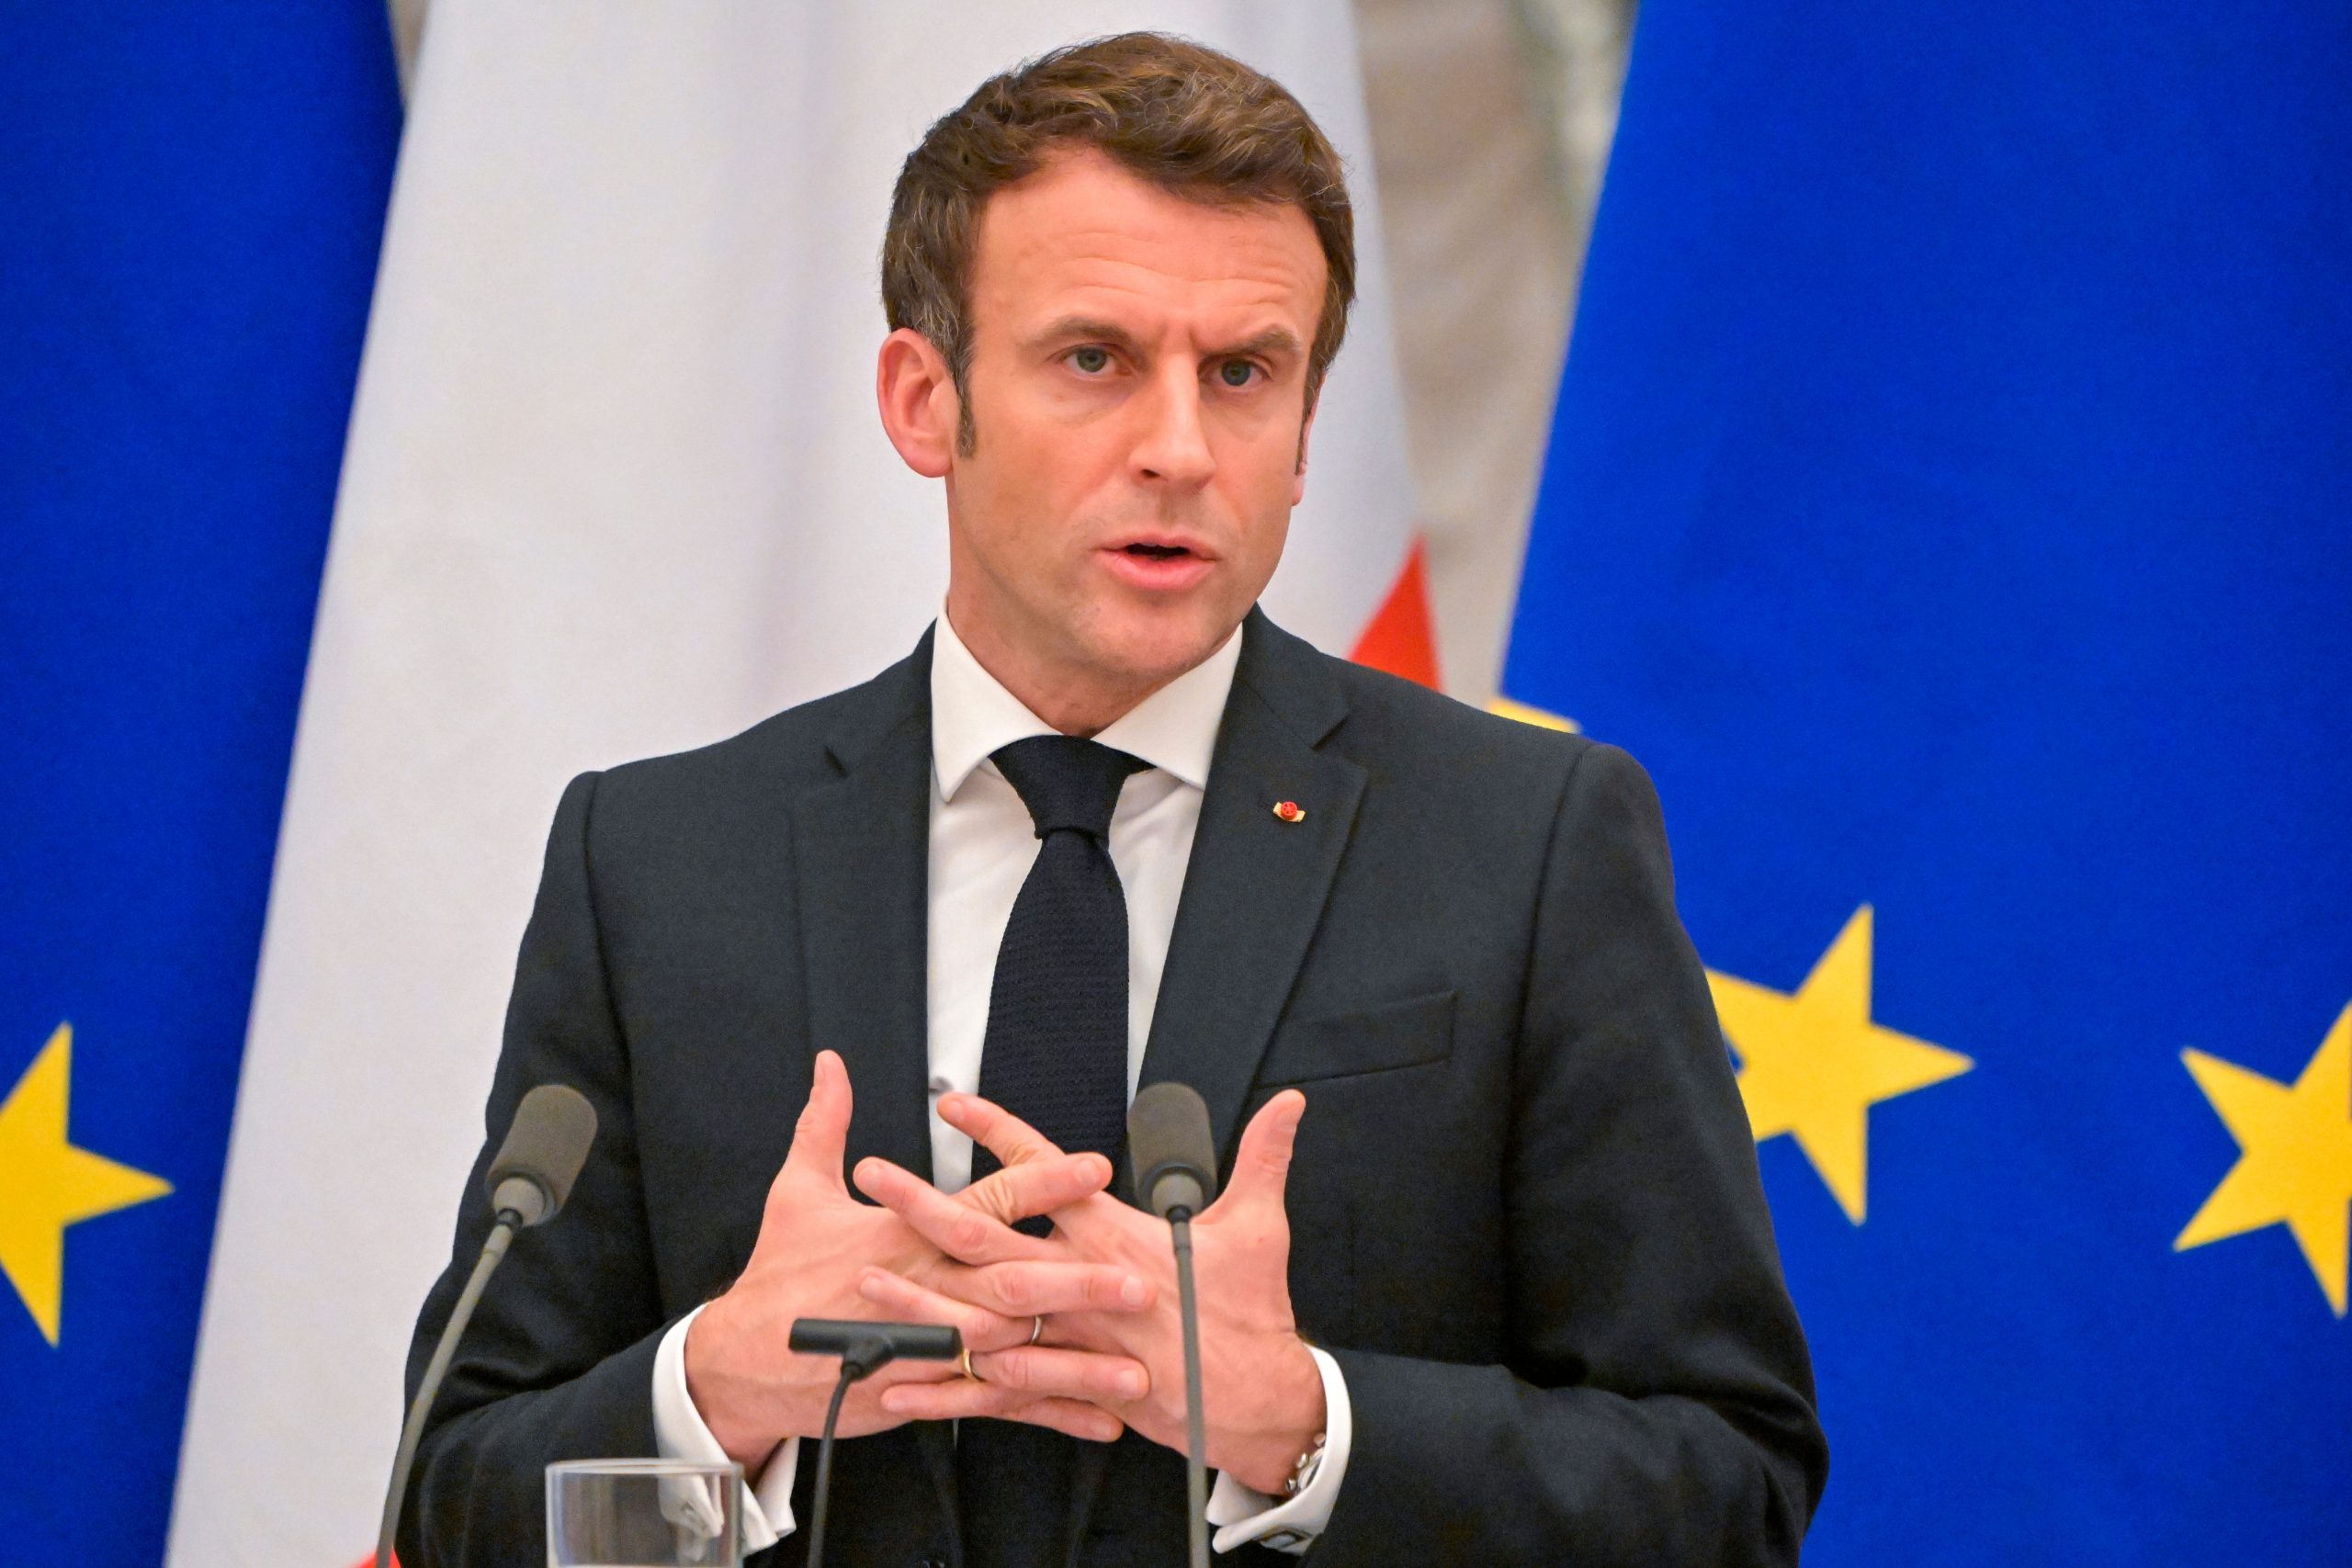 French President Emmanuel Macron heads to Kyiv after talks with Vladimir Putin, amid Ukraine crisis